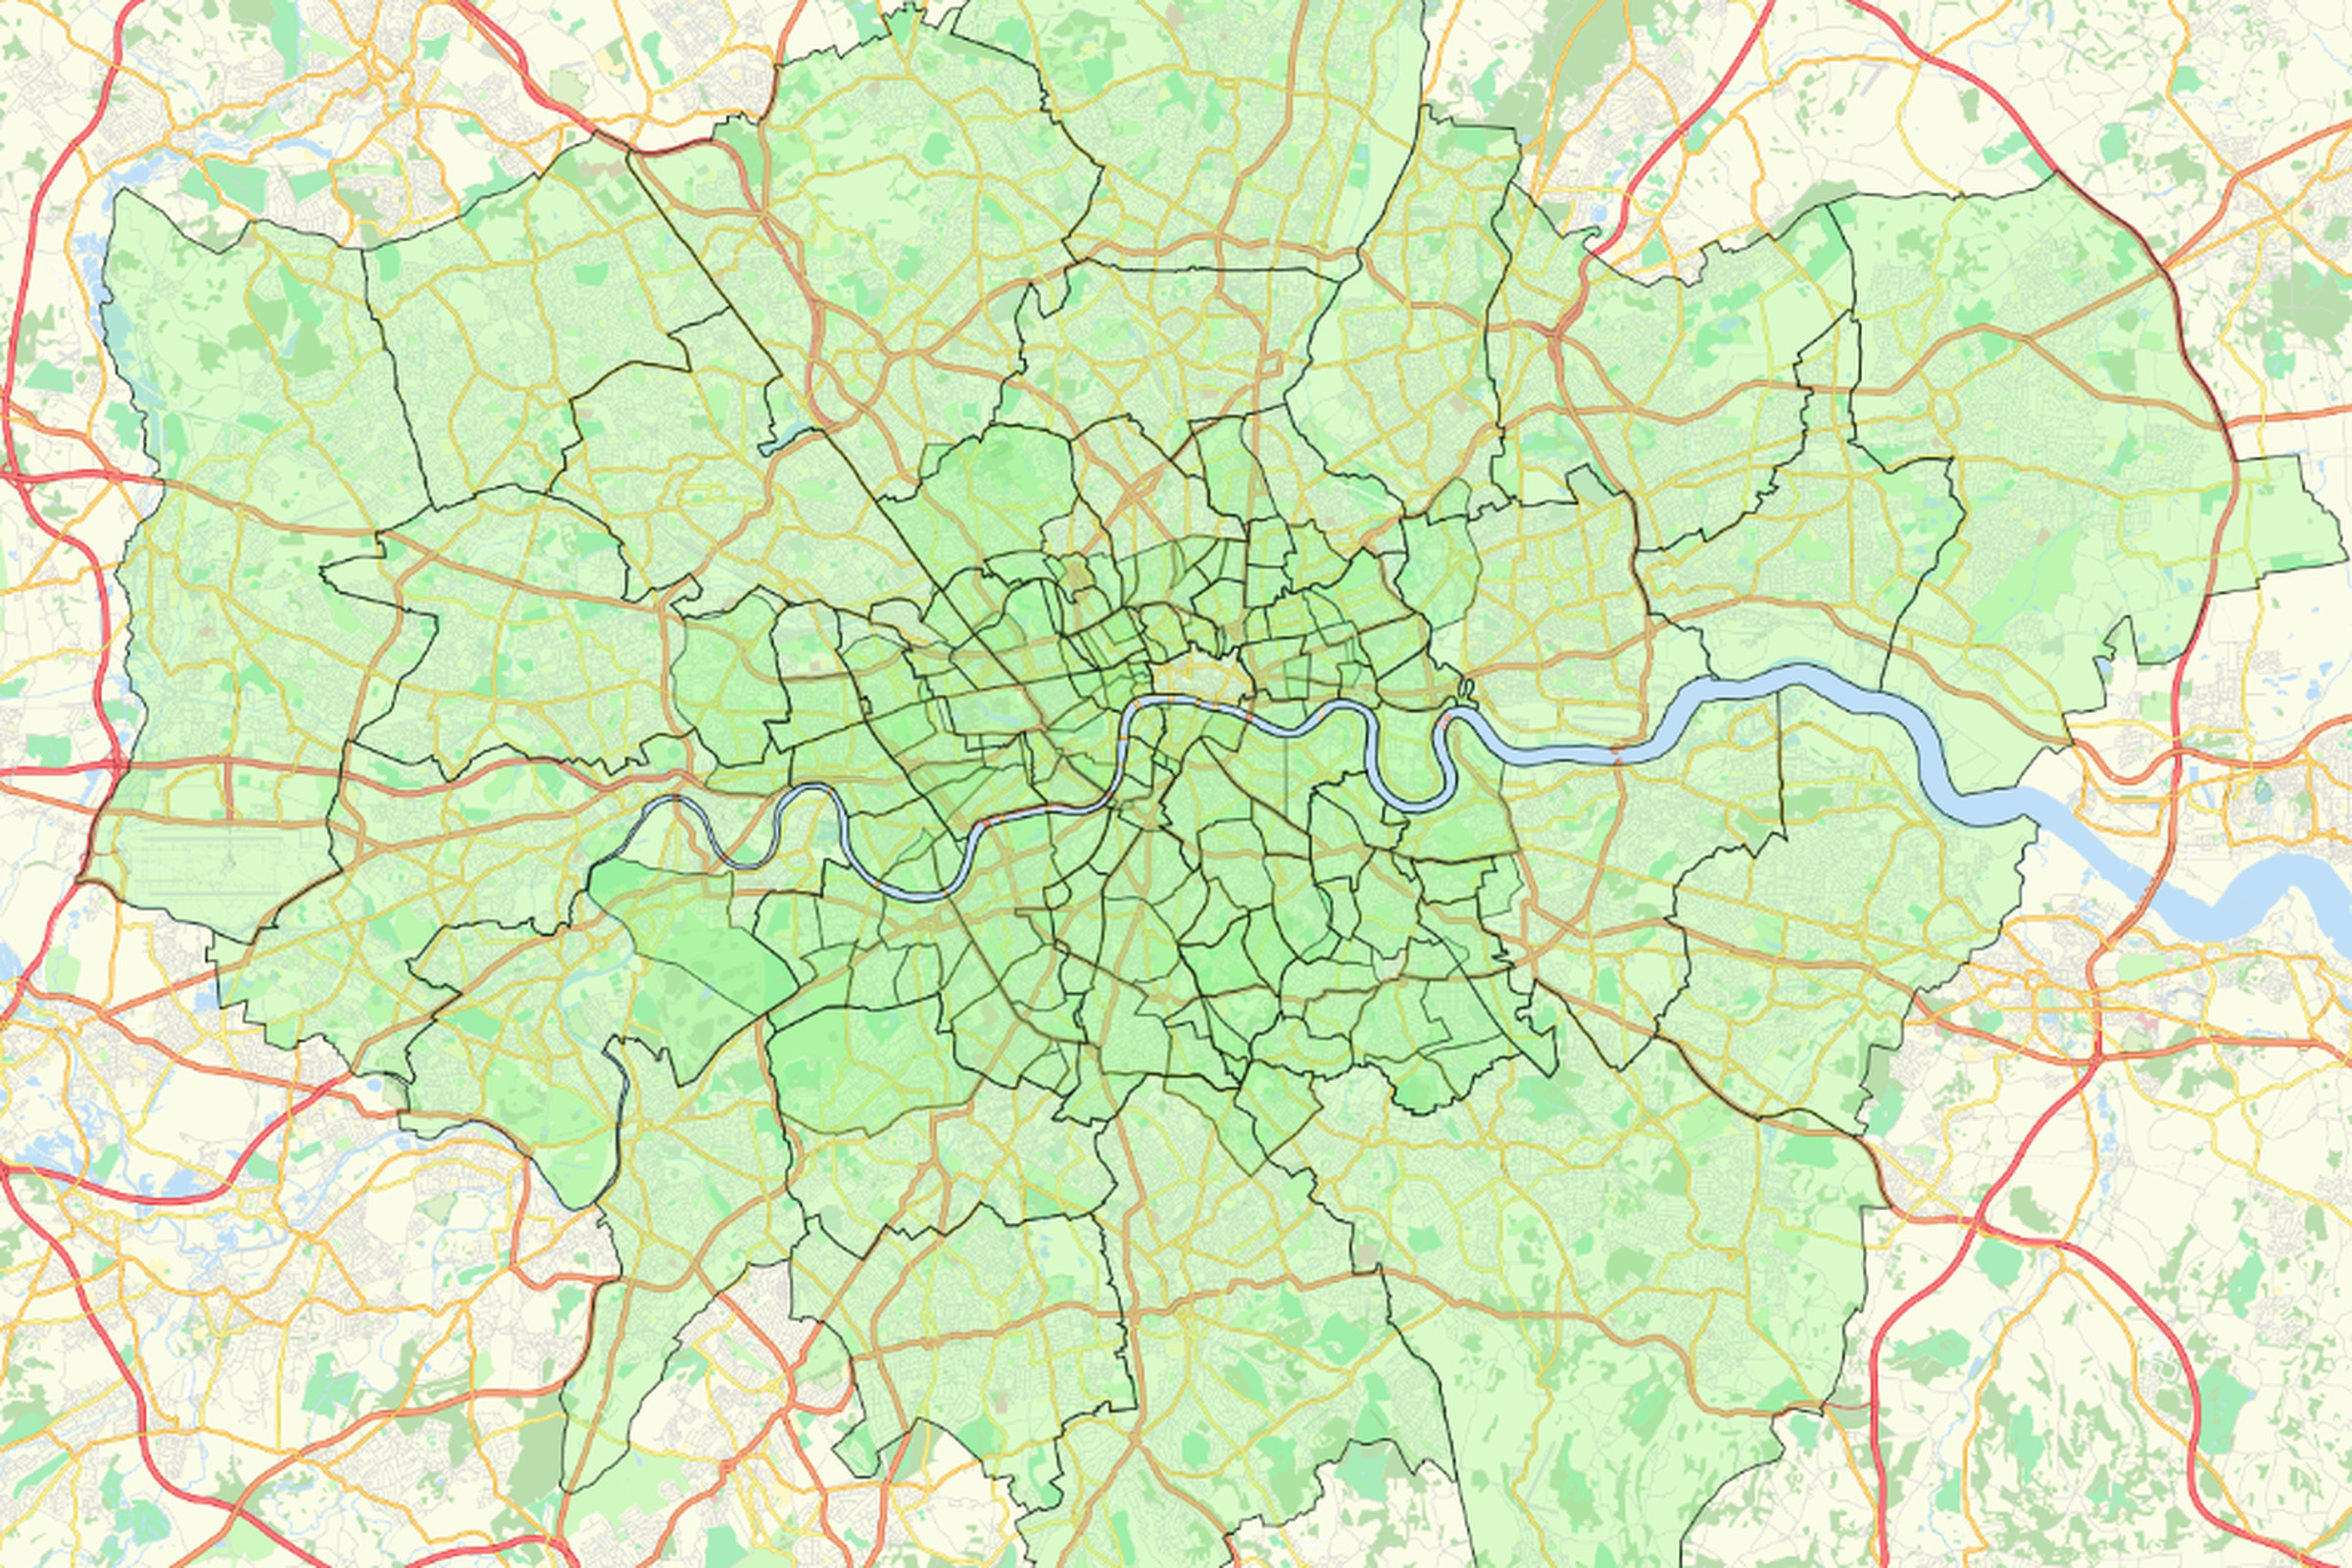 Walker's neighborhood airbnb map of London